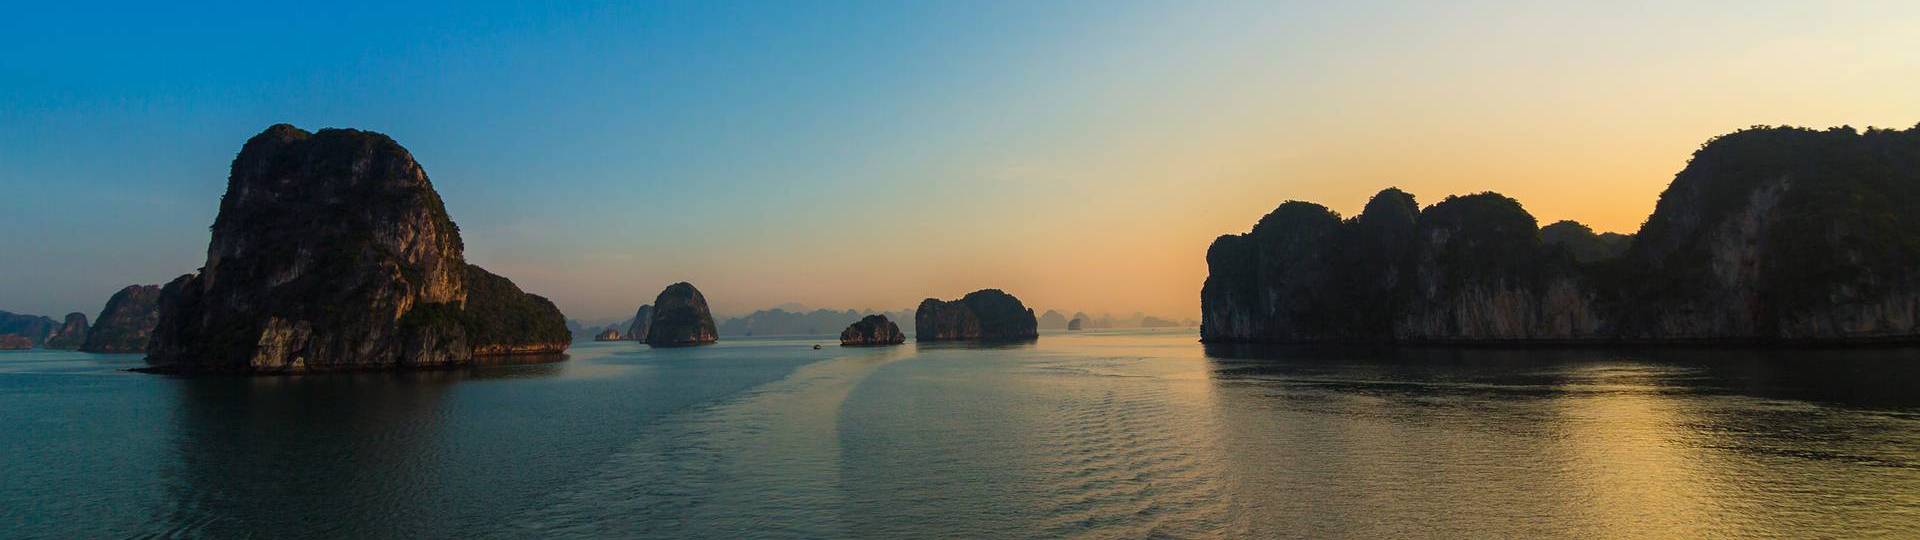 Bai Tu Long Bay - Wonder of Nature